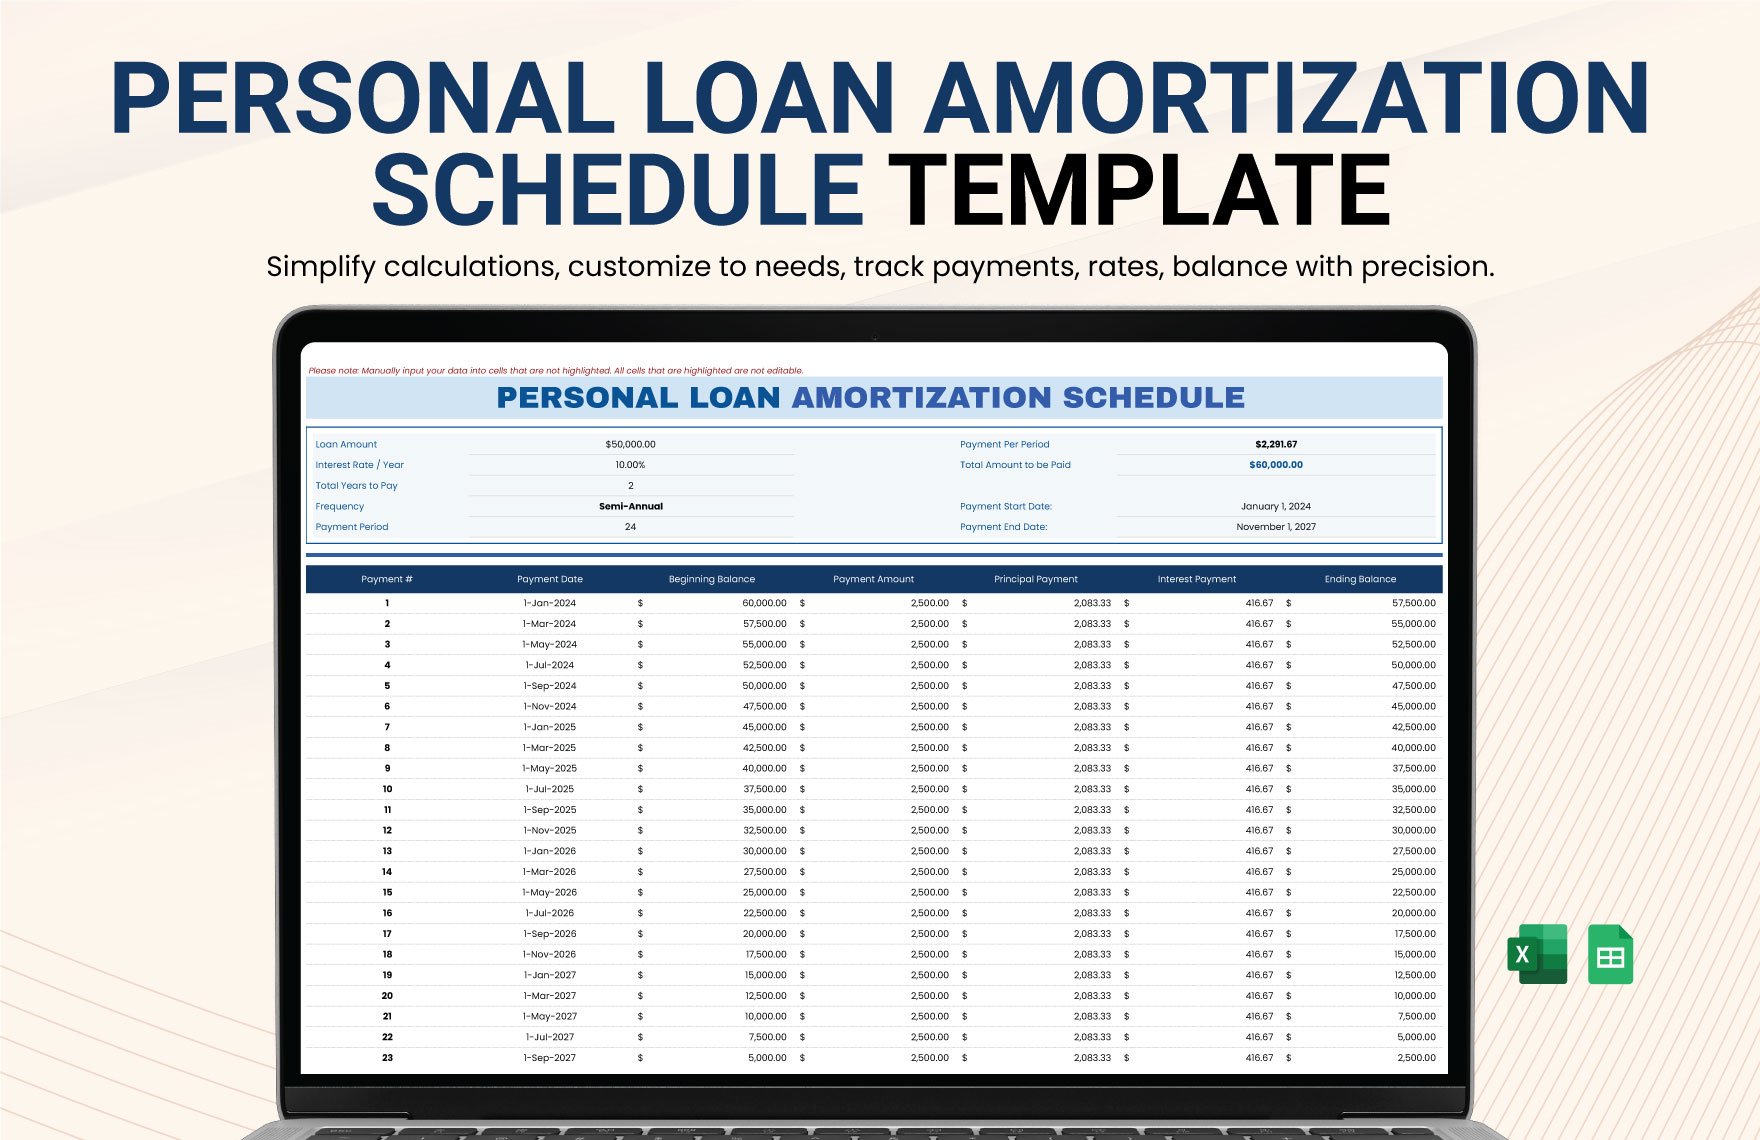 Personal Loan Amortization Schedule Template